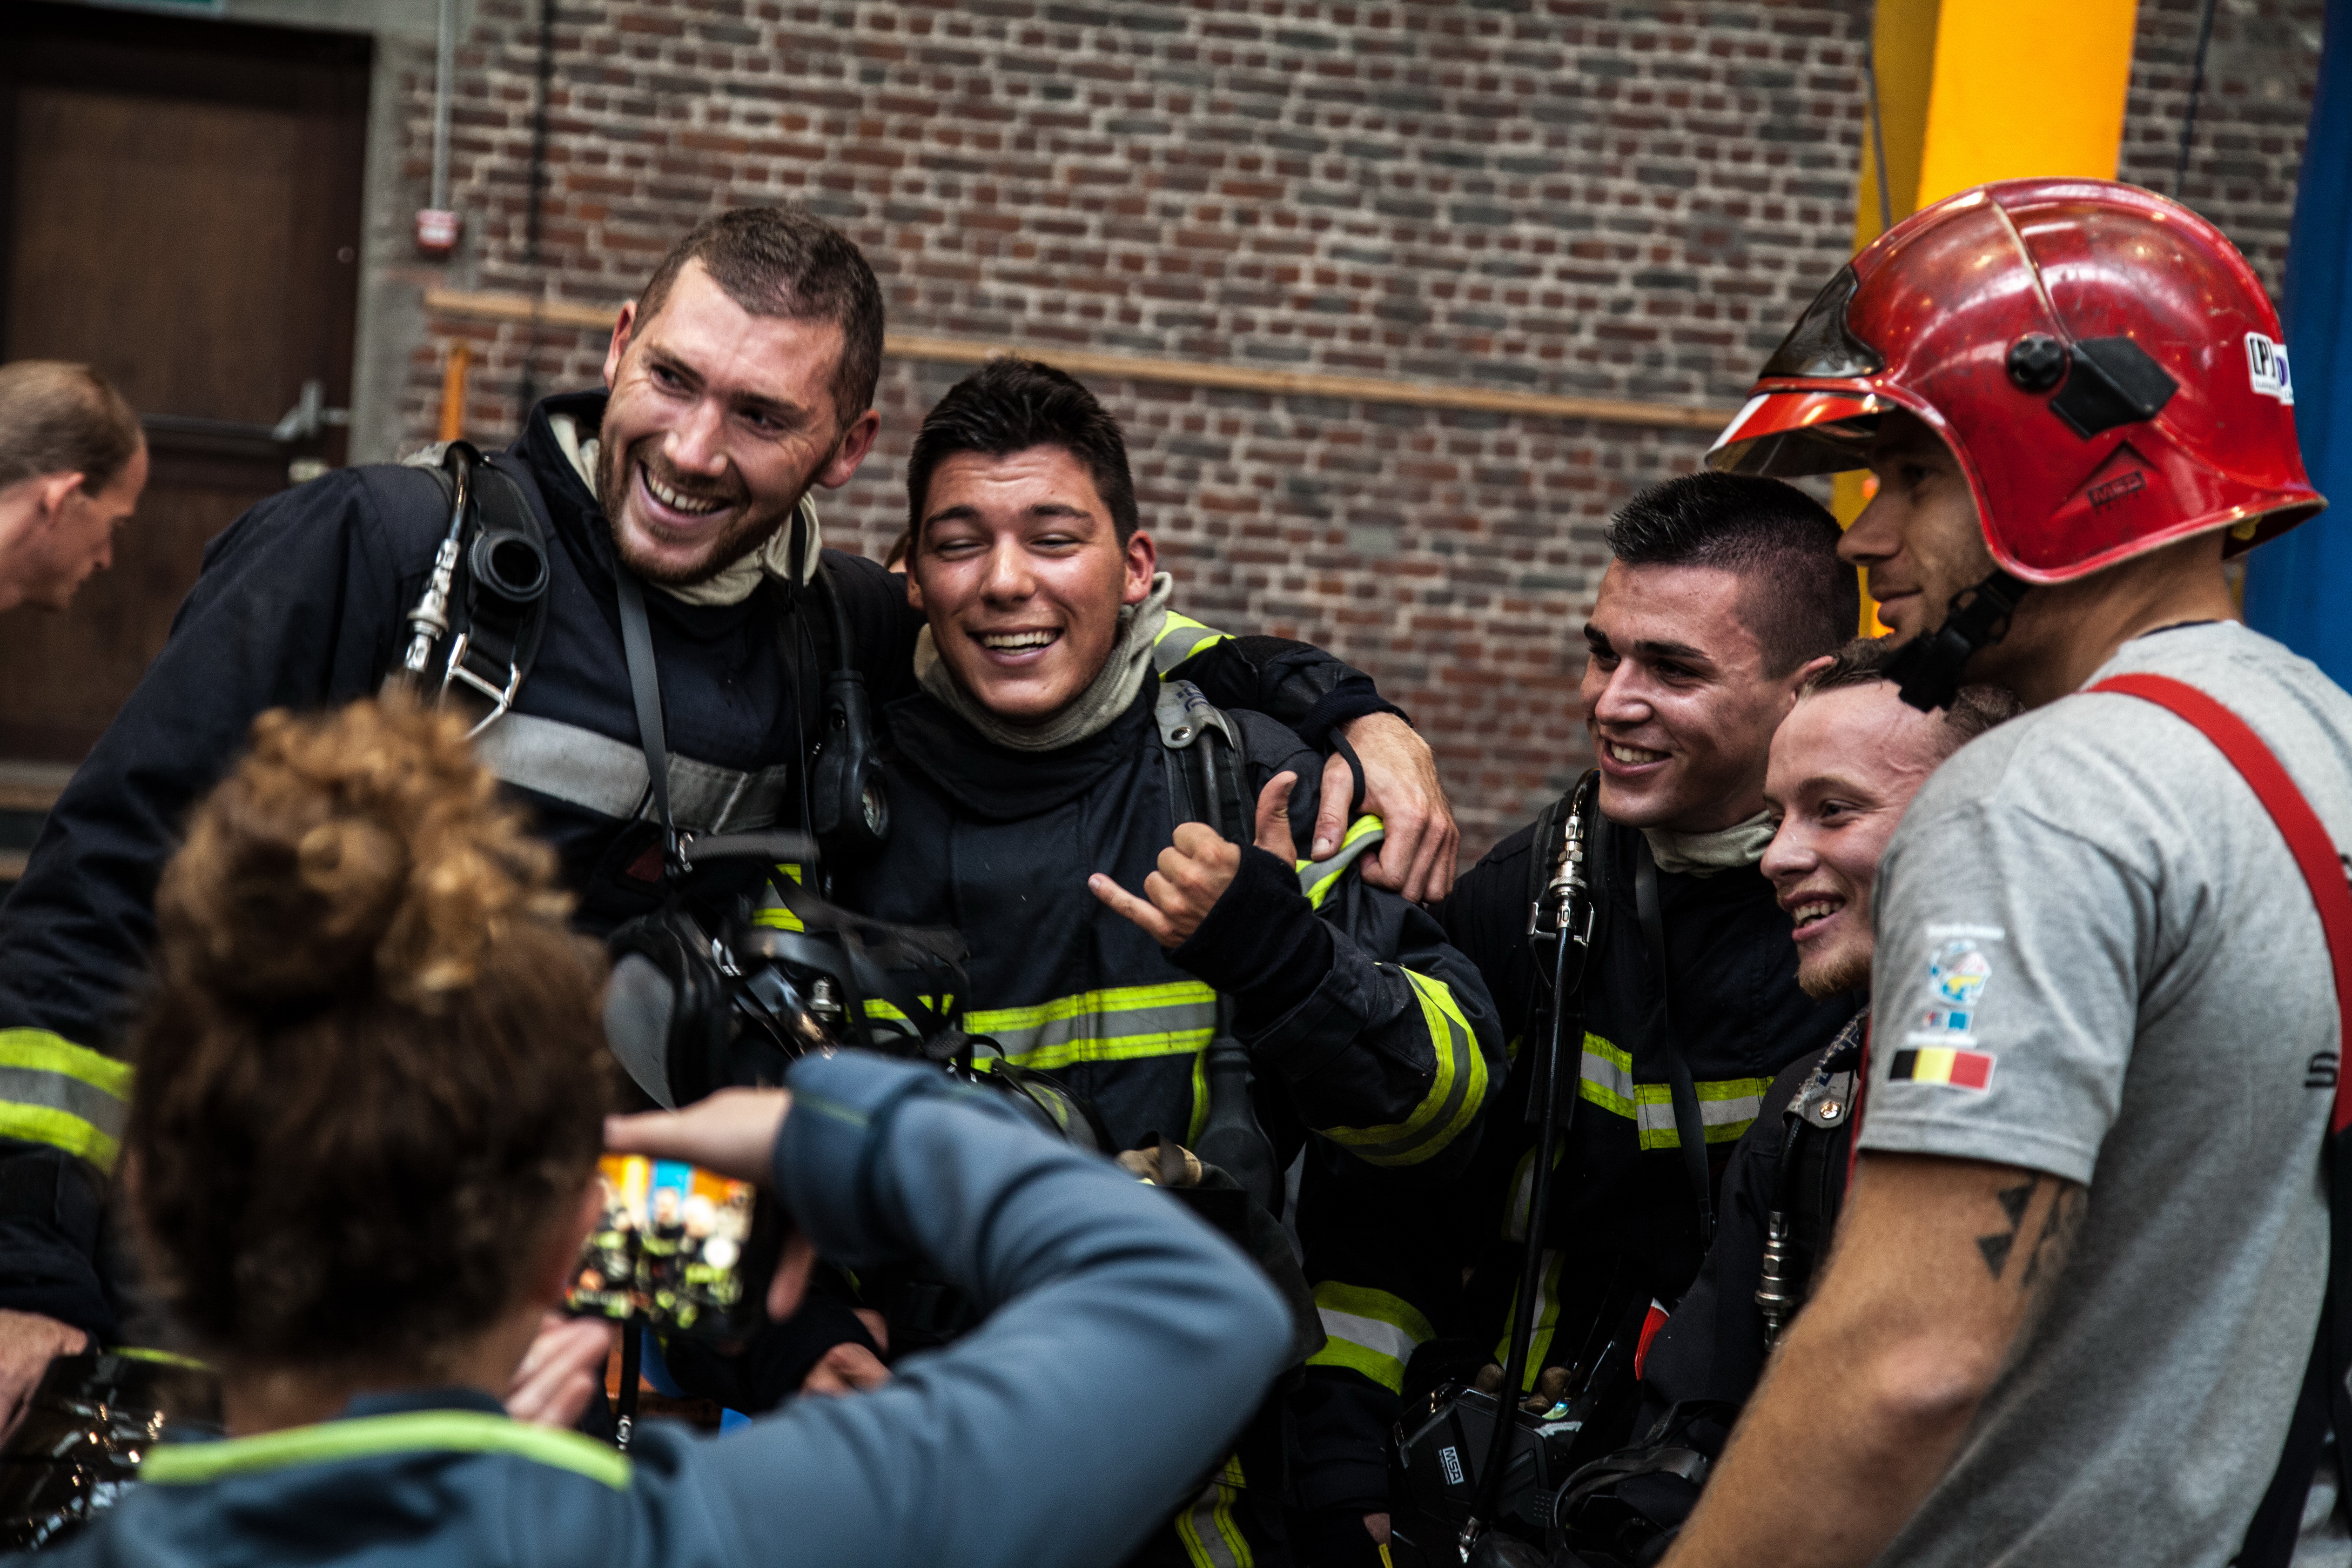 Survival Firefighter Run Brabant Wallon 2019